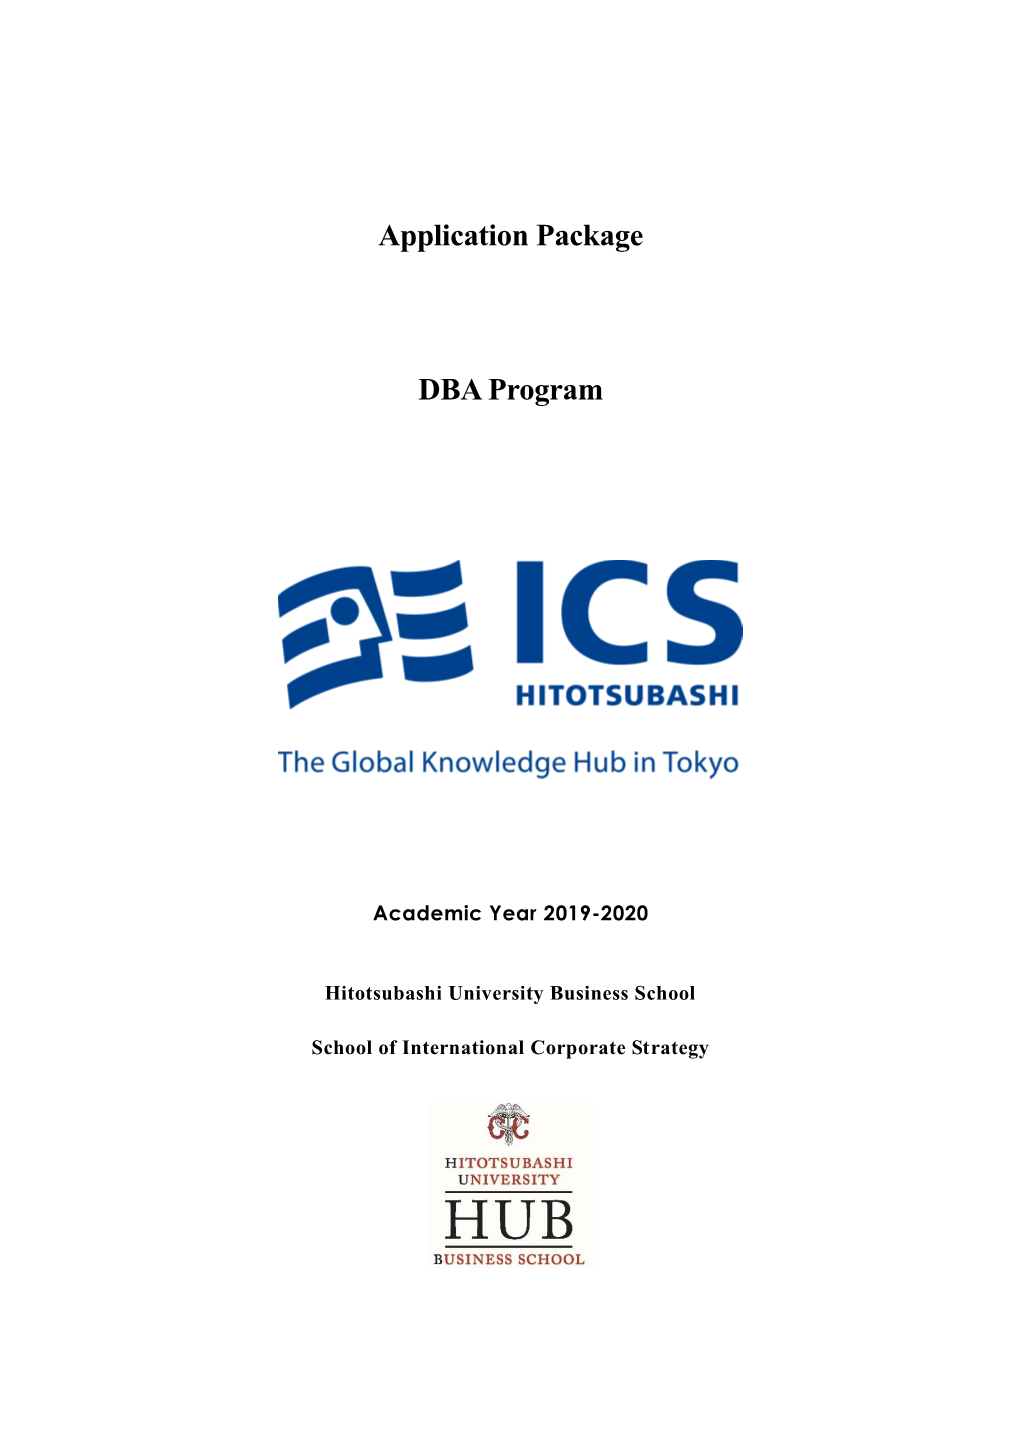 Application Package DBA Program